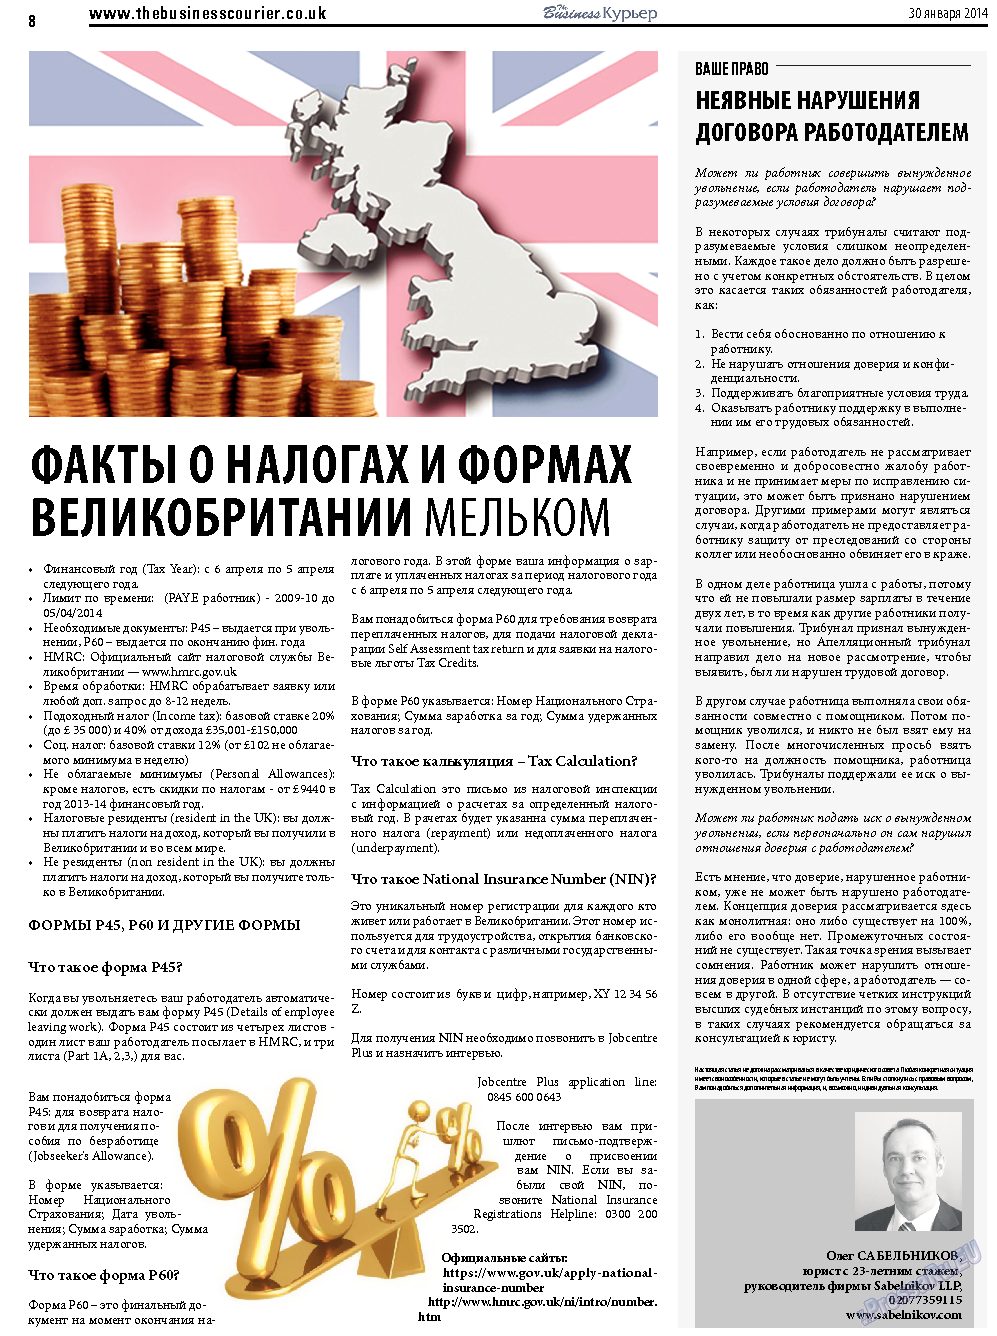 The Business Курьер, газета. 2014 №20 стр.8